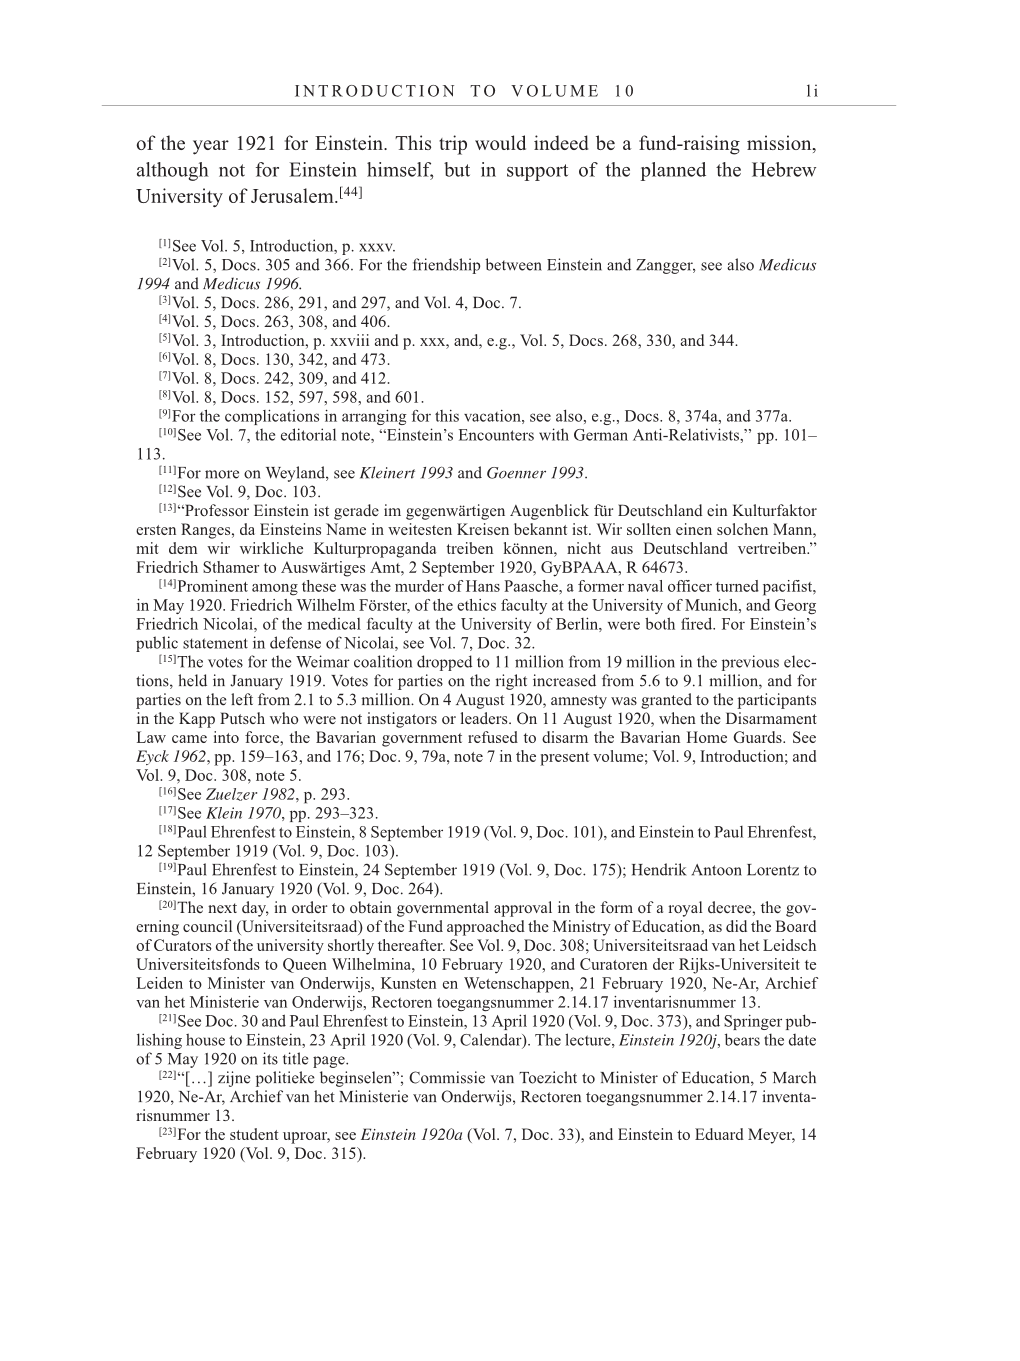 Volume 10: The Berlin Years: Correspondence May-December 1920 / Supplementary Correspondence 1909-1920 page li